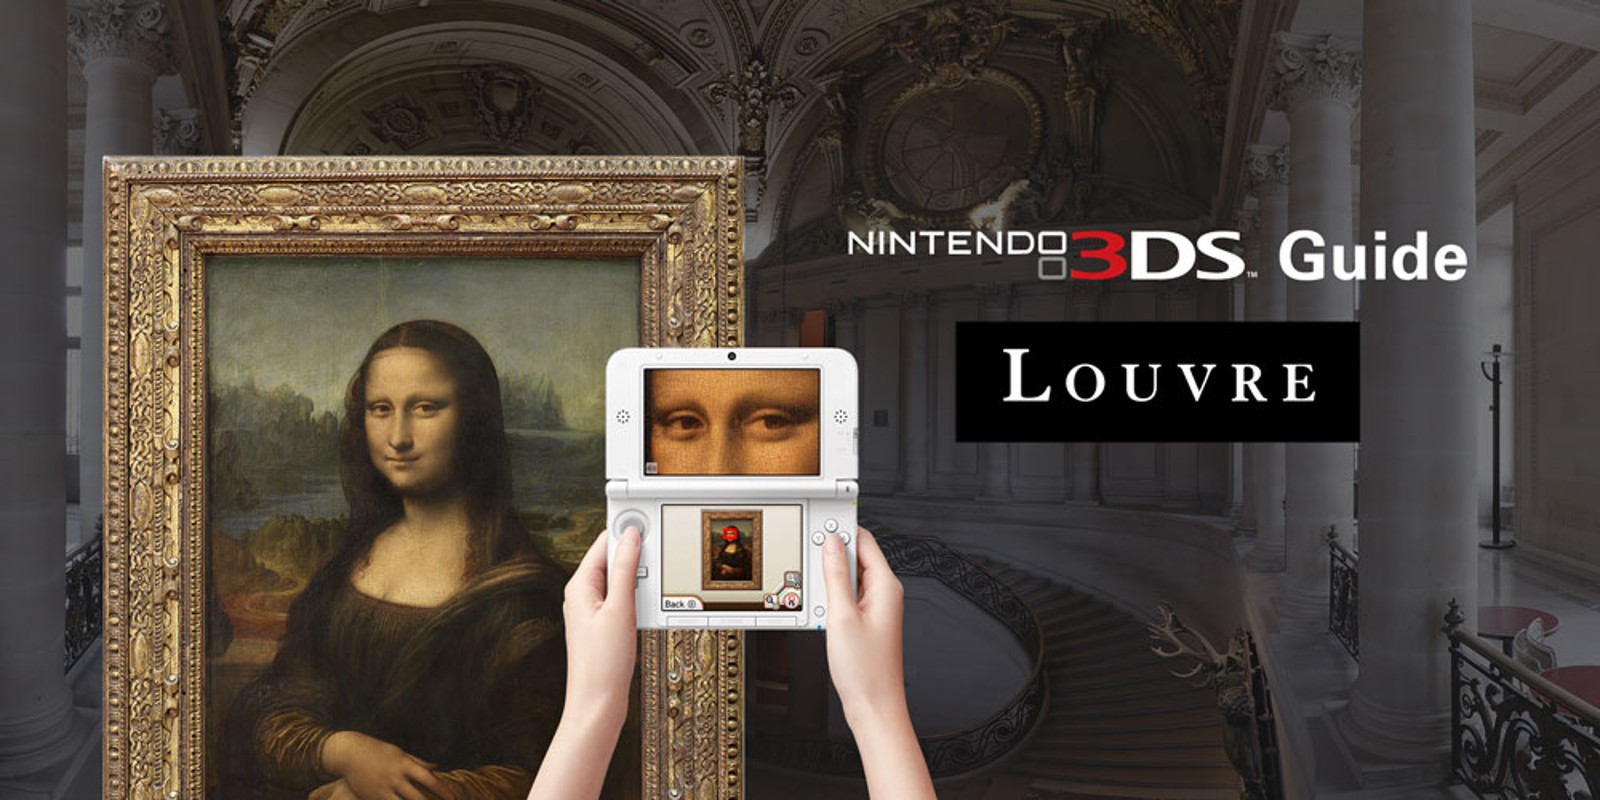 Planeta malta Espectáculo Nintendo 3DS Guide Louvre | Juegos de Nintendo 3DS | Juegos | Nintendo